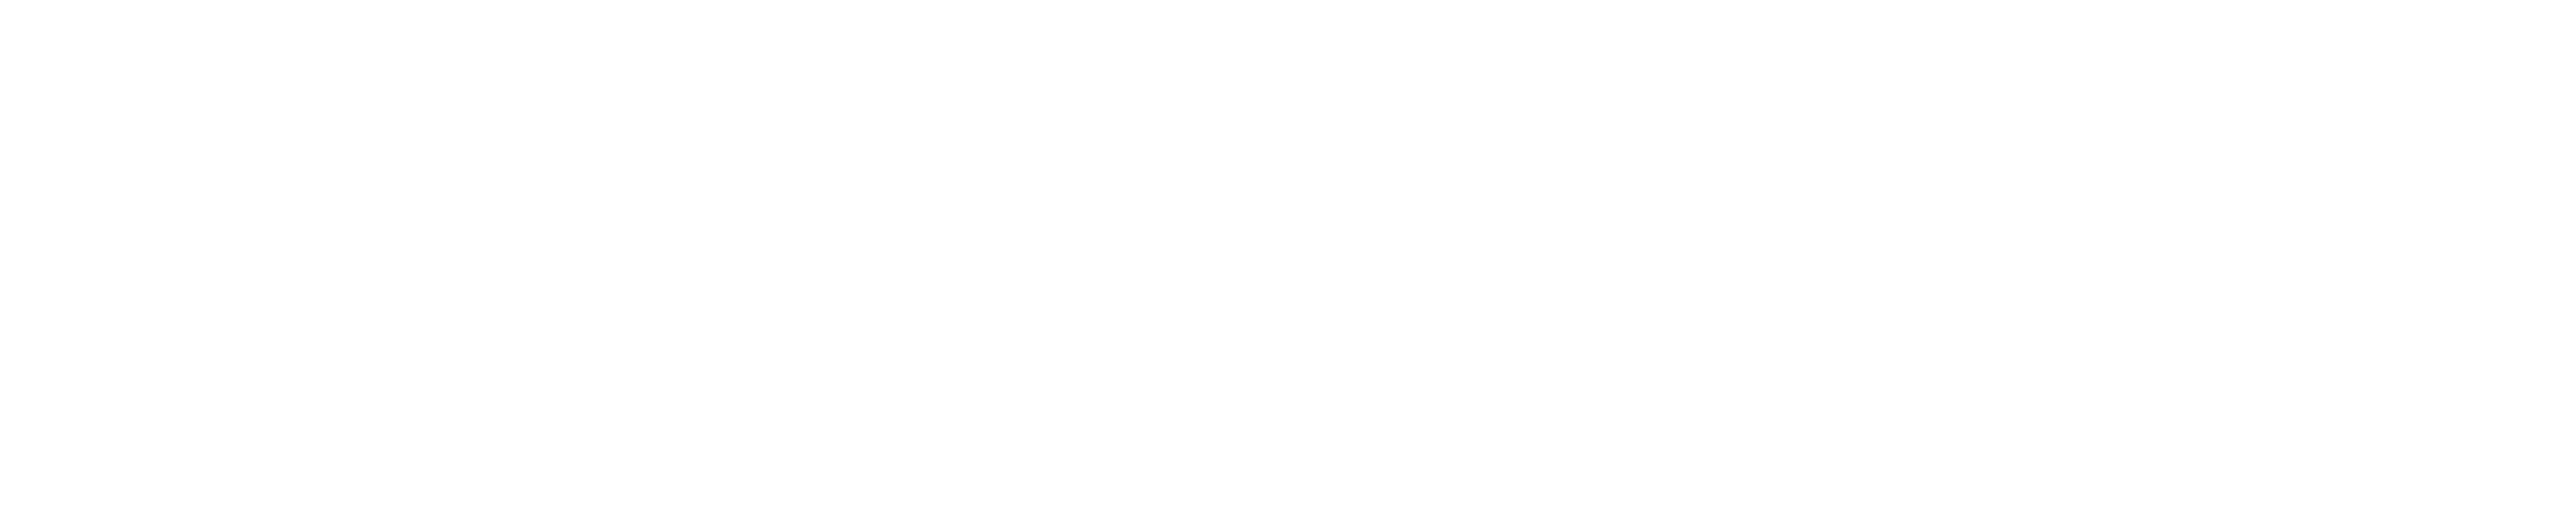 C21-Seaboard-Properties-logo_white